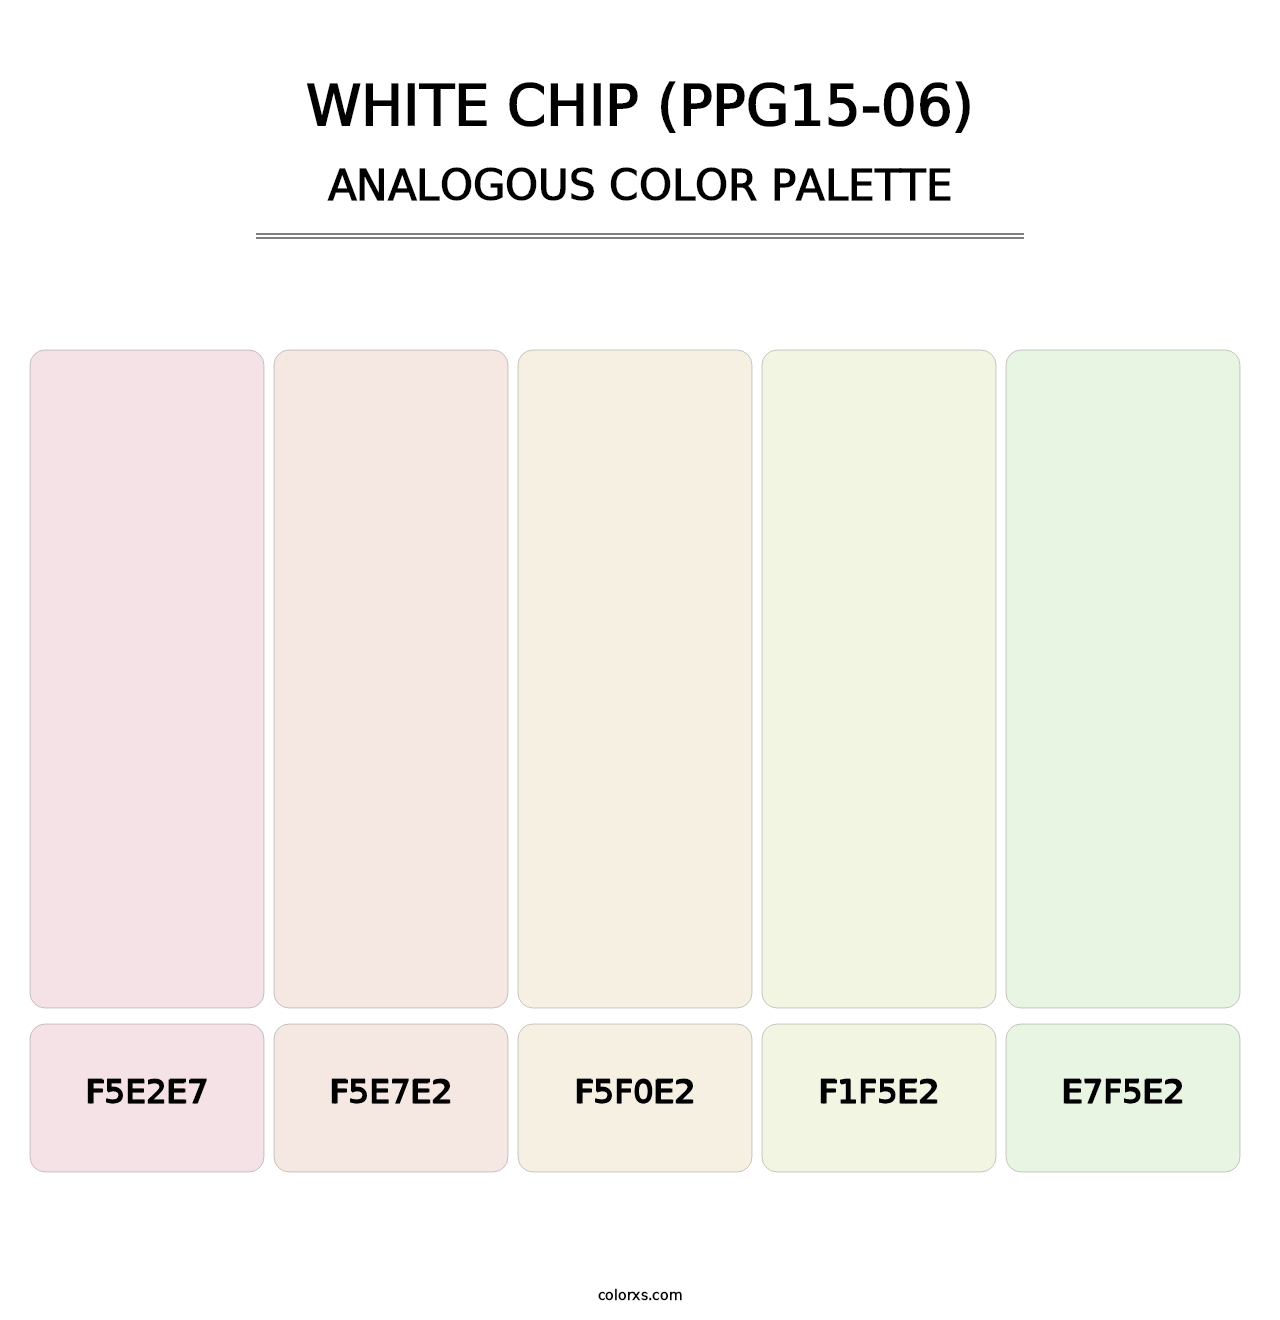 White Chip (PPG15-06) - Analogous Color Palette